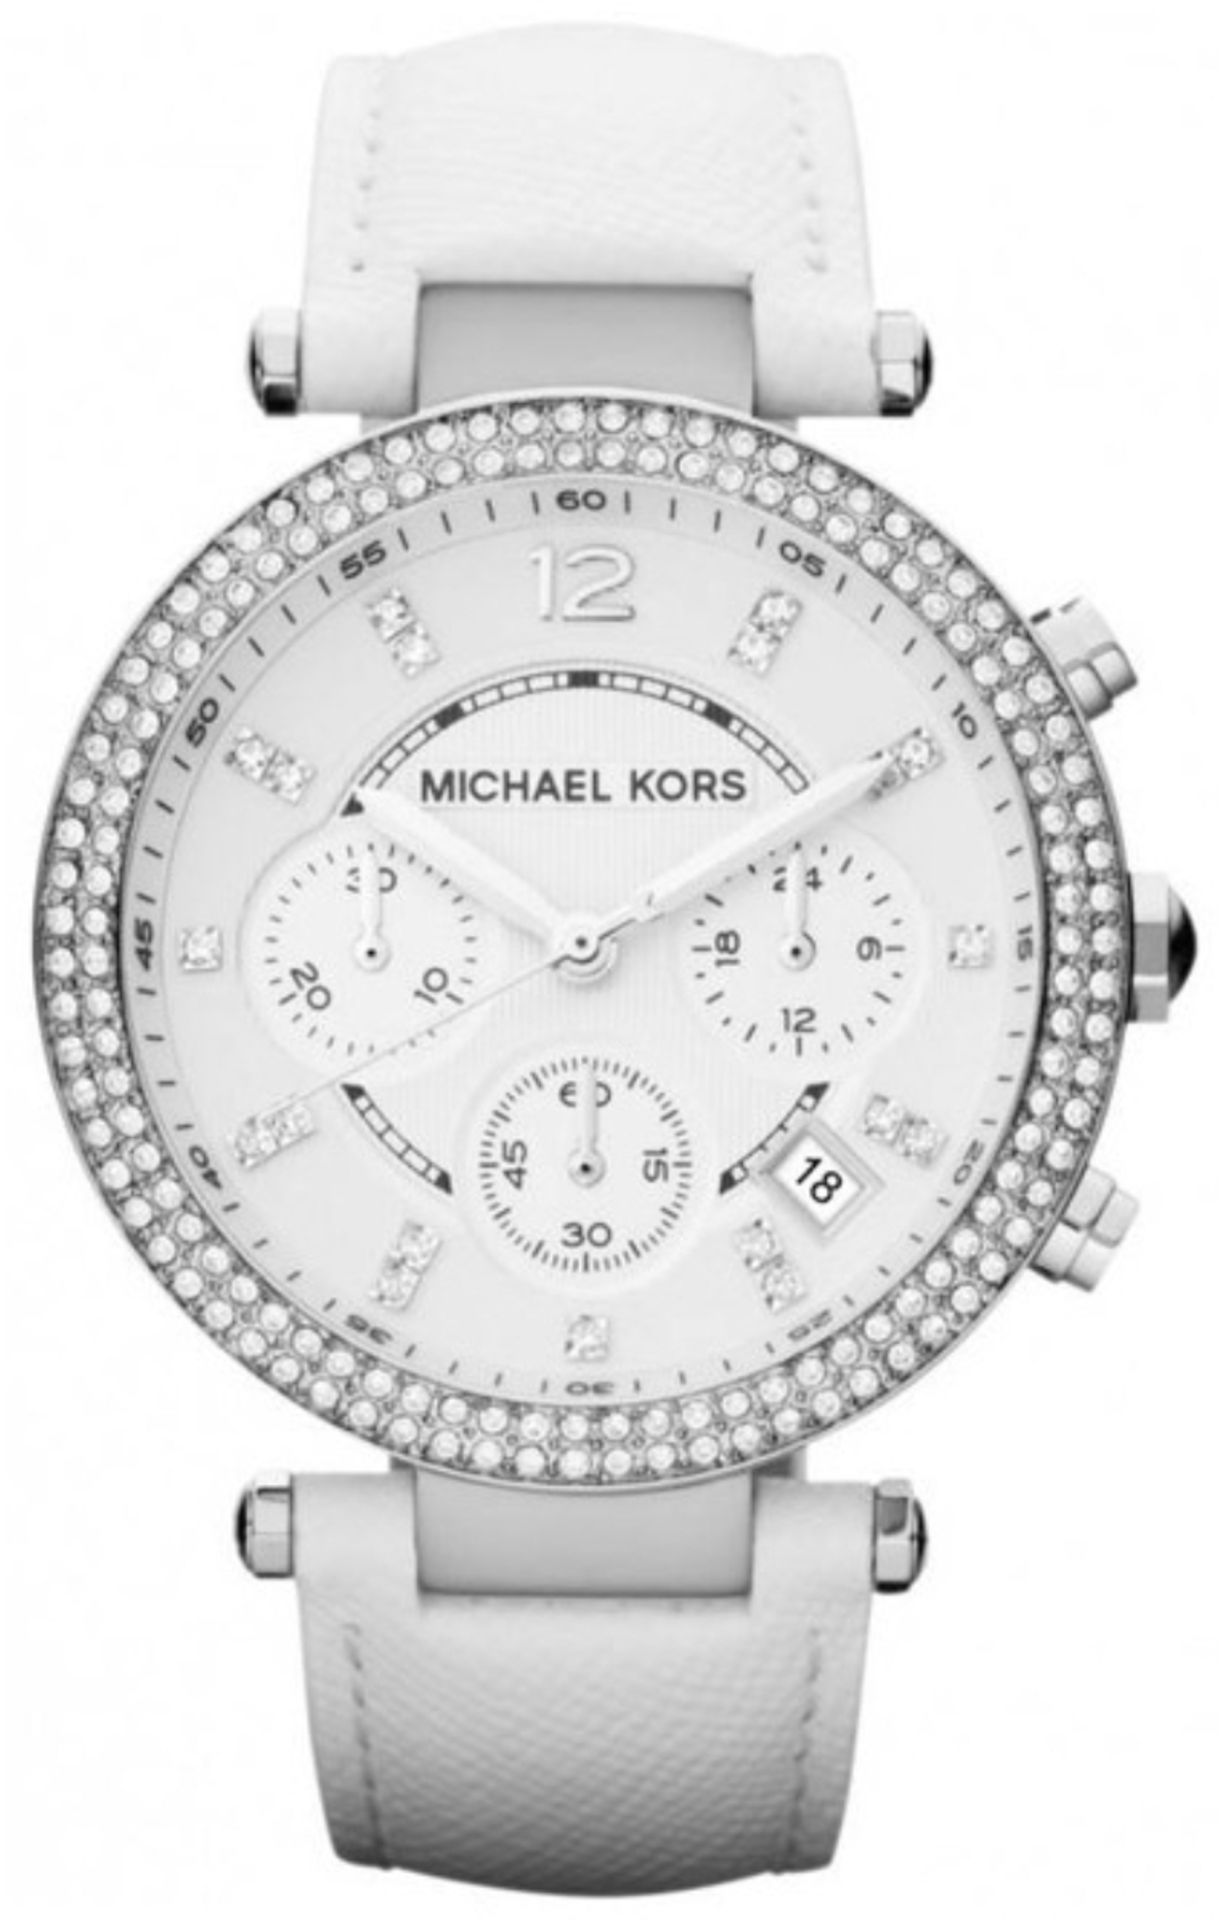 Michael Kors MK2277 Ladies Parker White Leather Strap quartz Chronograph Designer Watch - Image 2 of 6